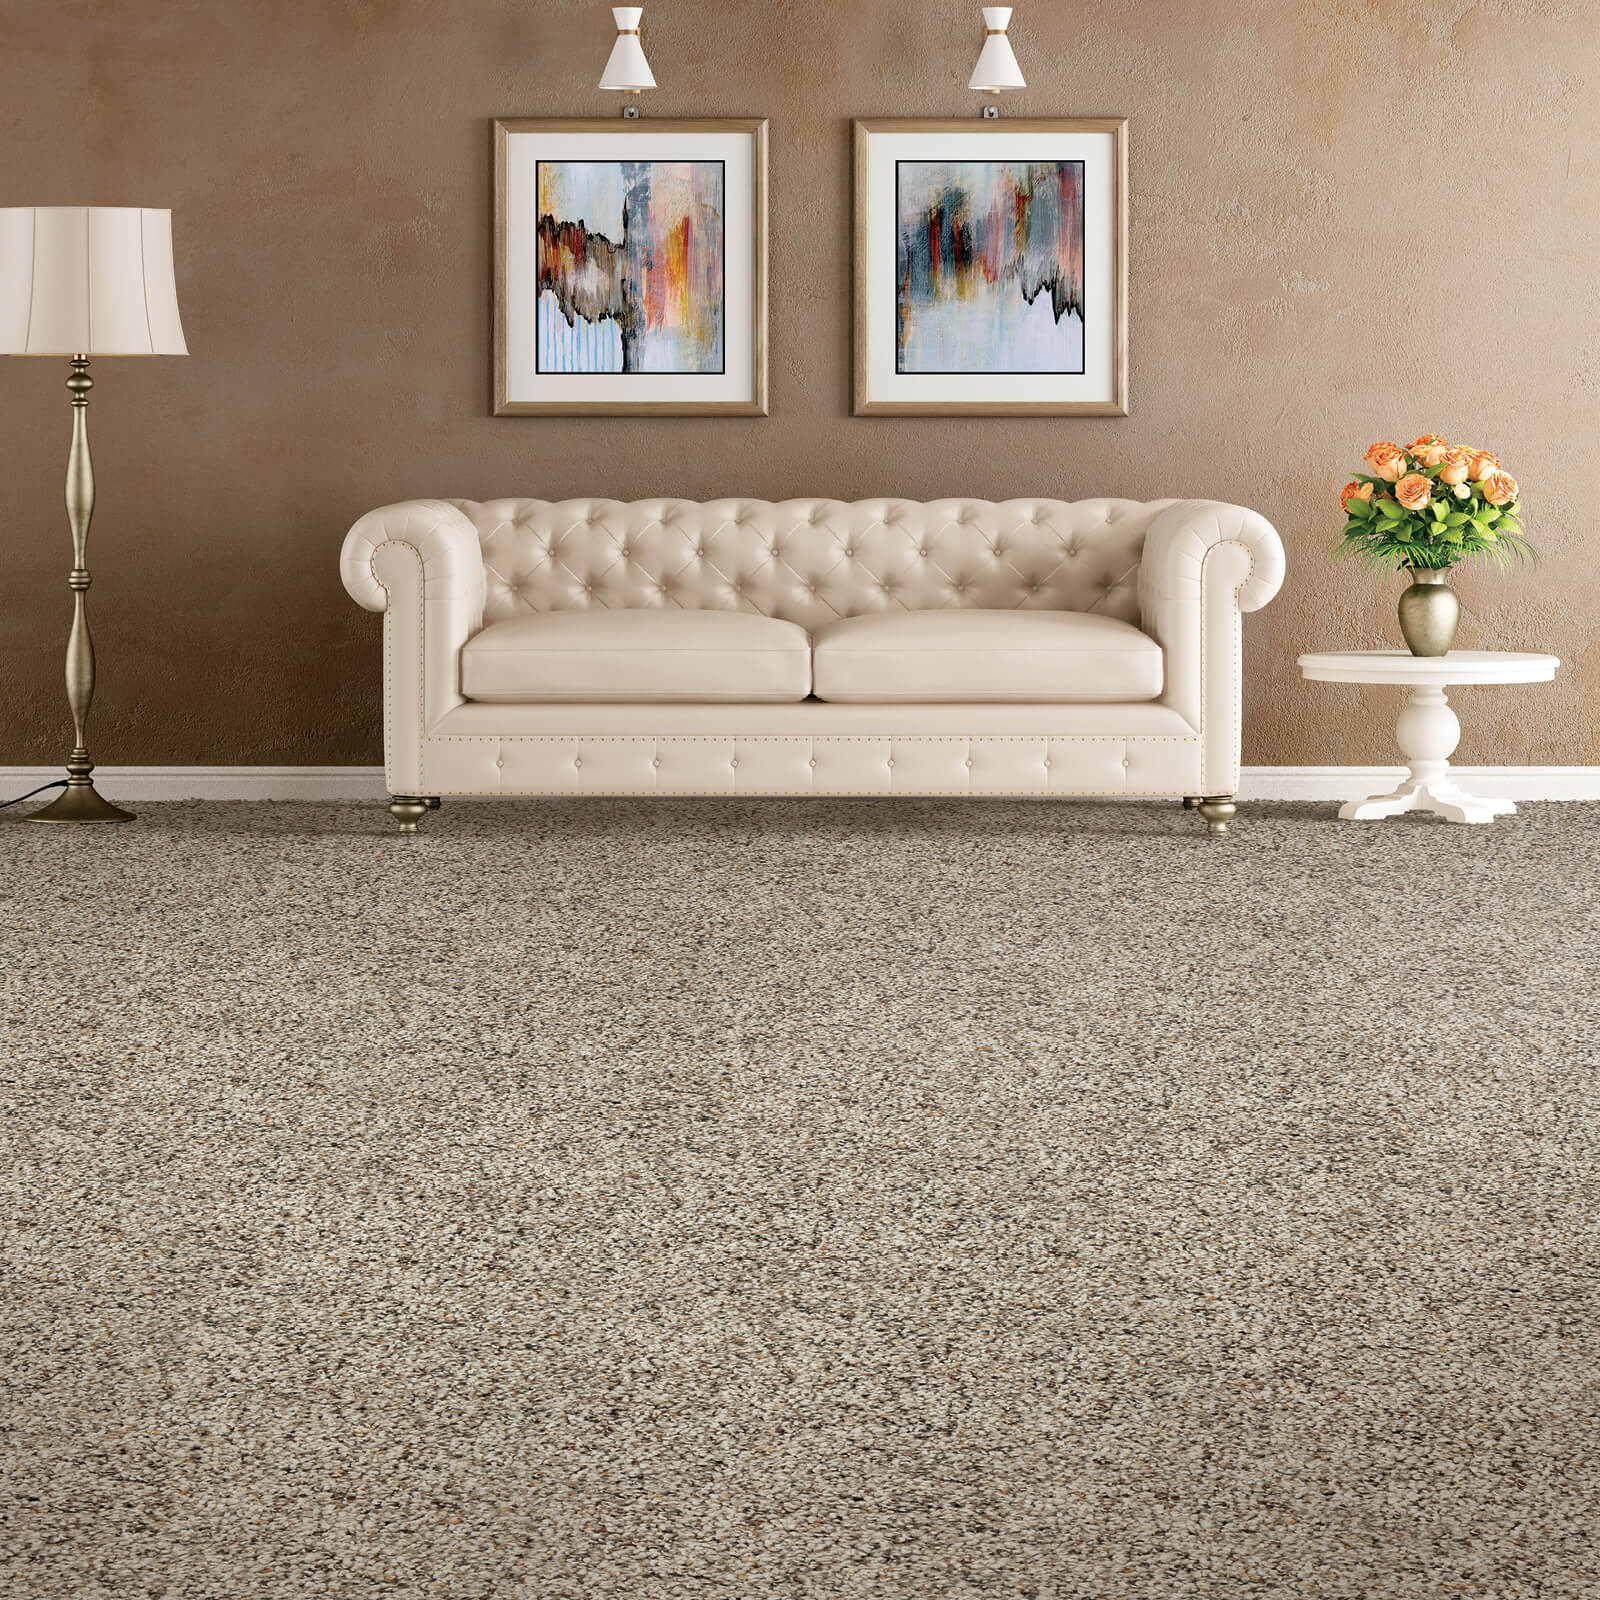 Soft comfortable carpet | Sarmazian Brothers Flooring